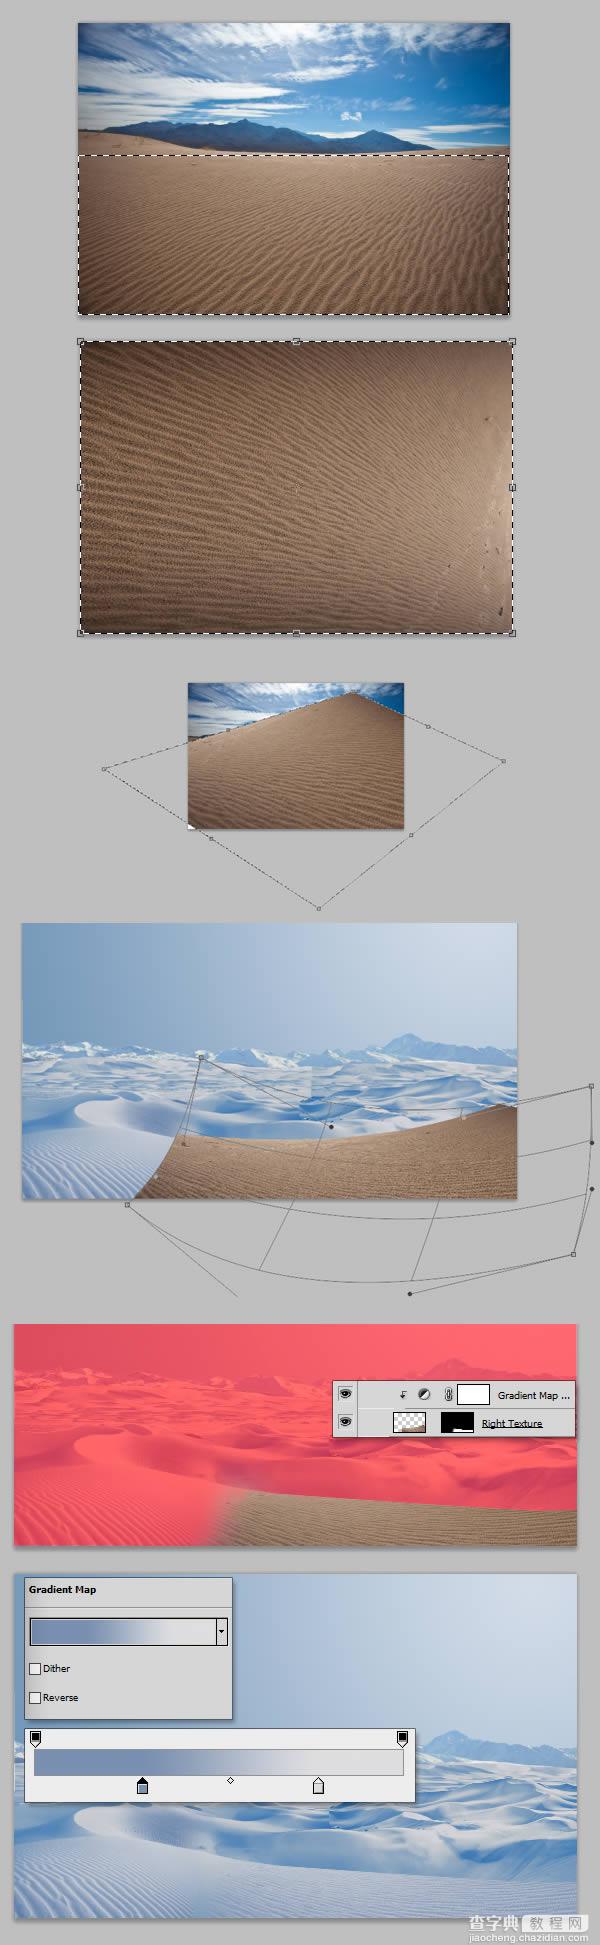 photoshop将荒漠场景打造出迪士尼风格的雪景图25